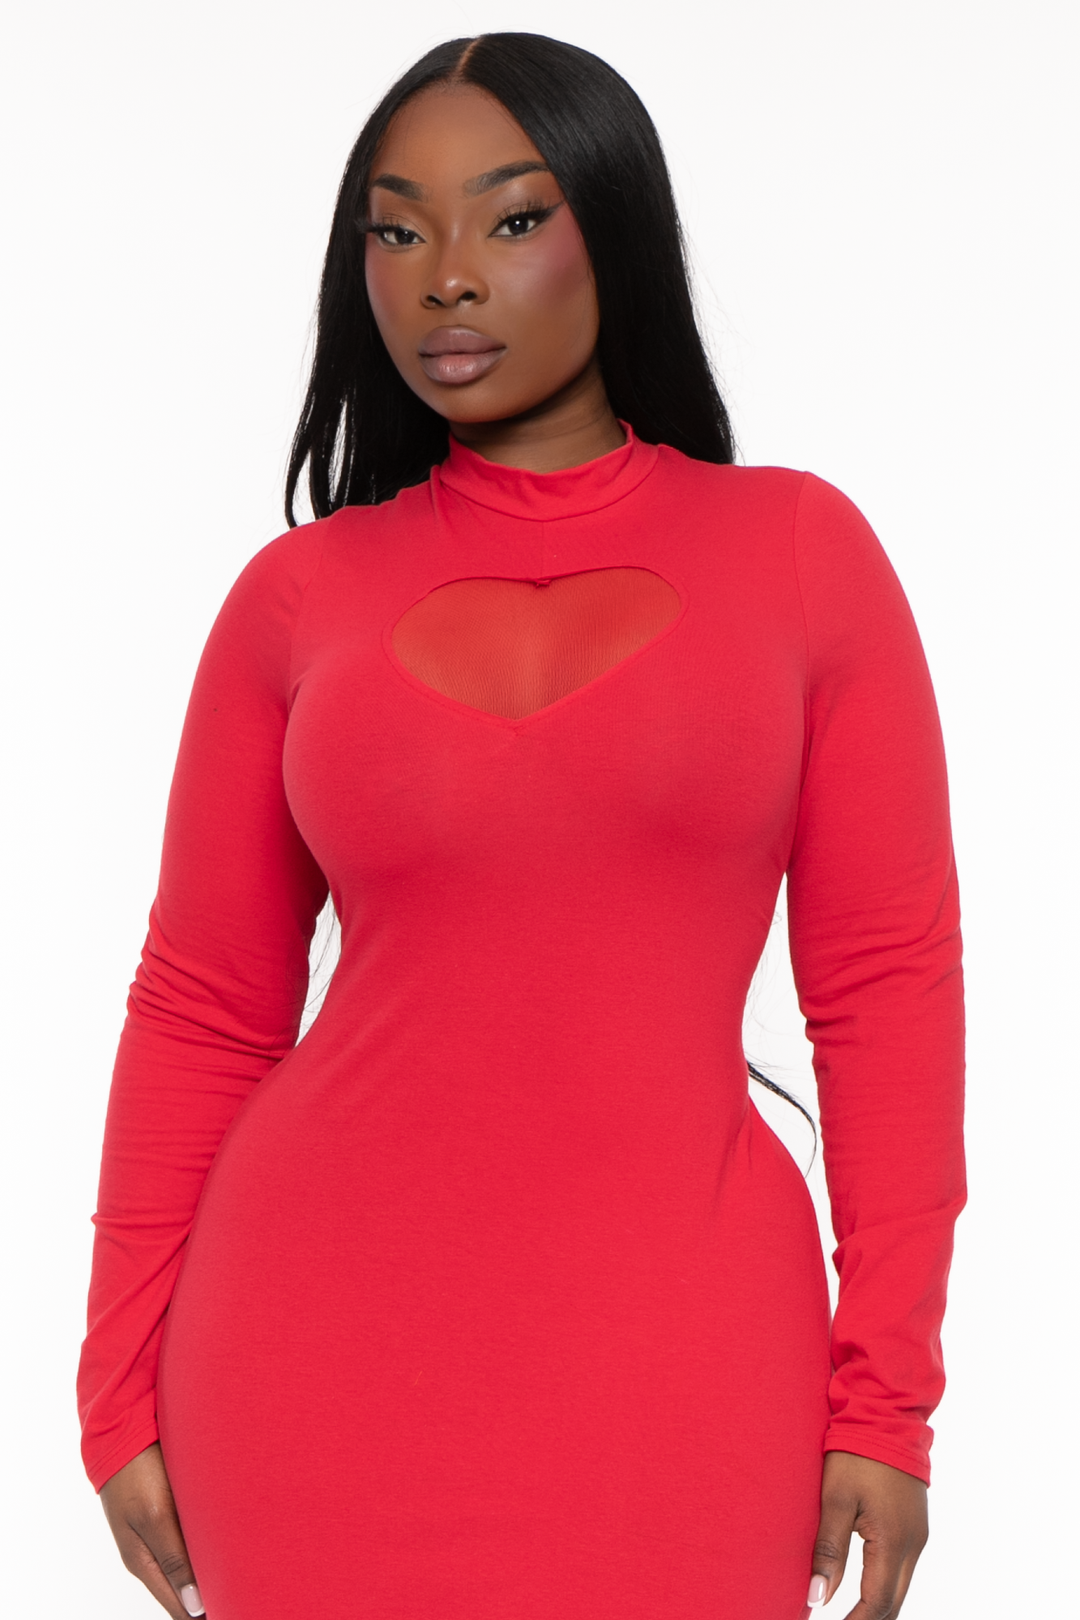 Curvy Sense Dresses Plus Size Lovey Heart Cut Out Dress - Red